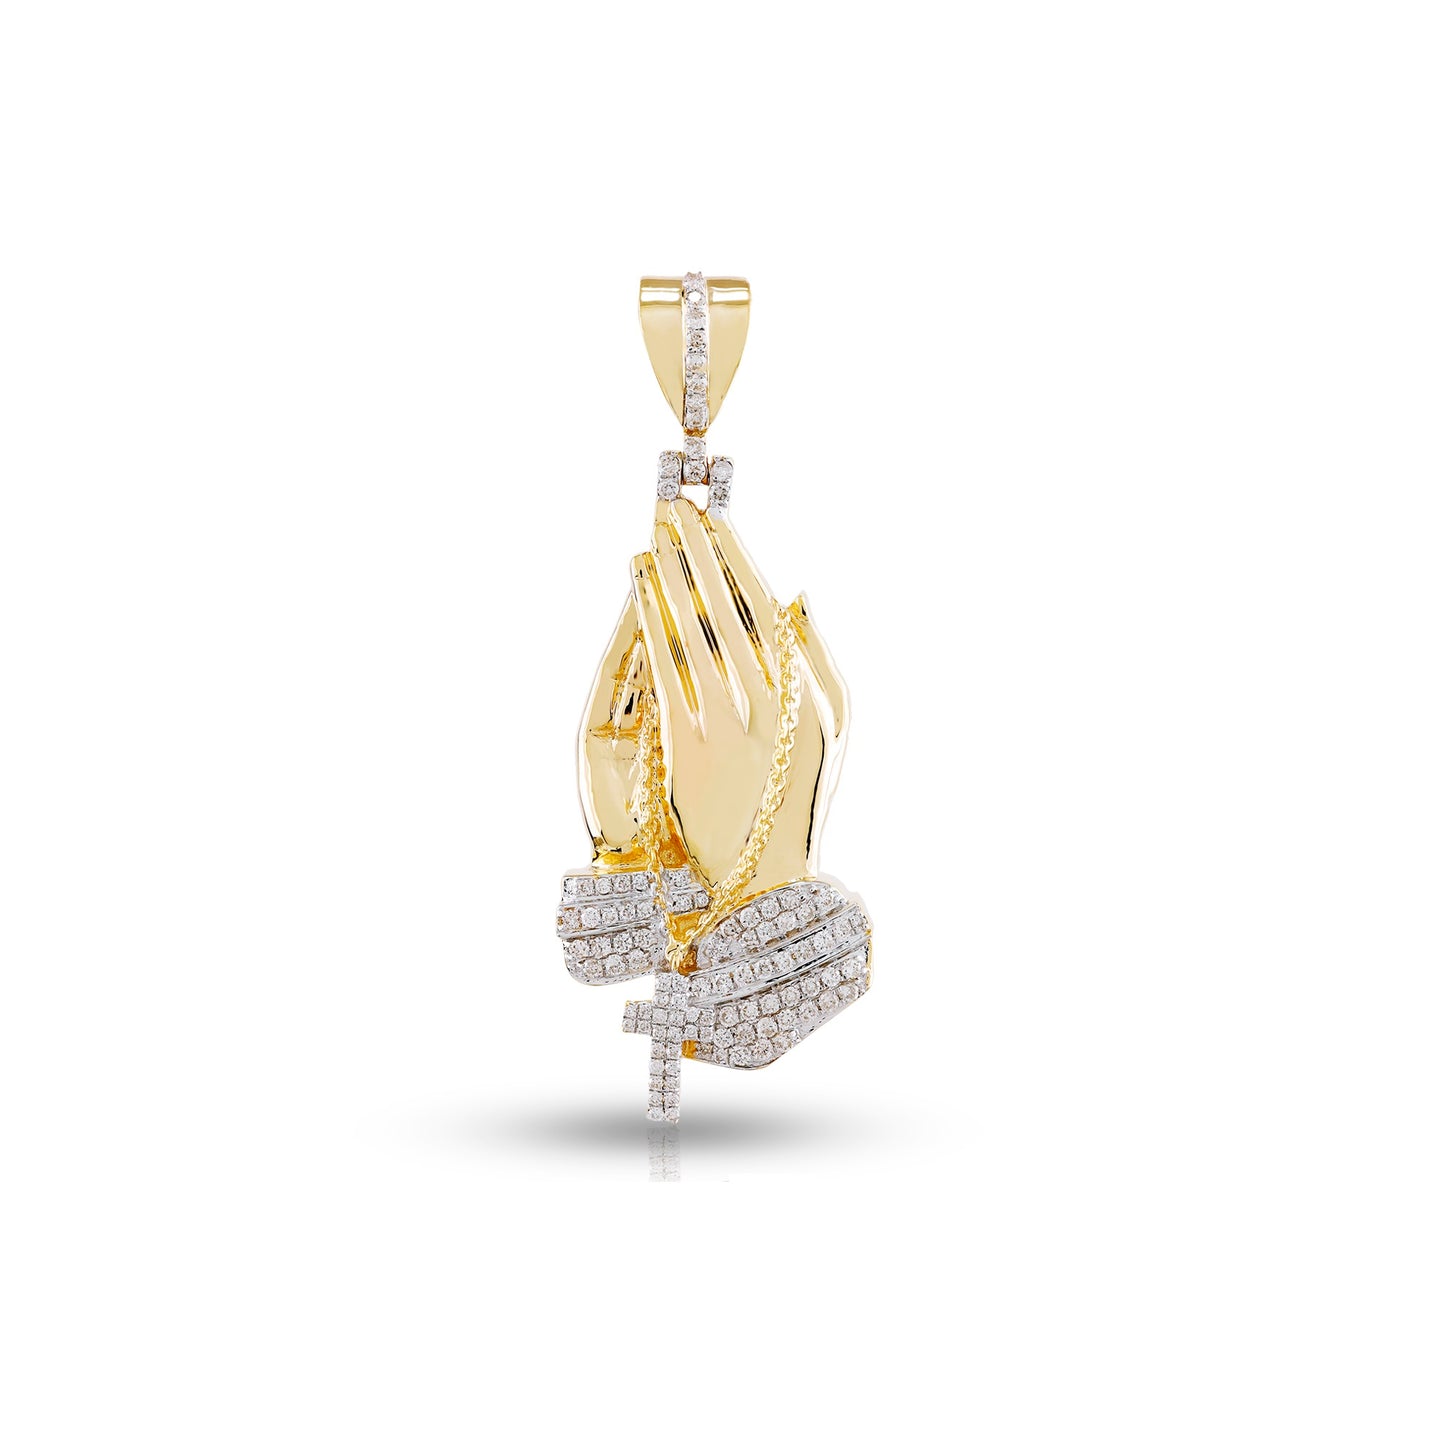 10K Yellow Gold Praying Hands Pendant with 0.380 Carat ,VS G-H Diamond